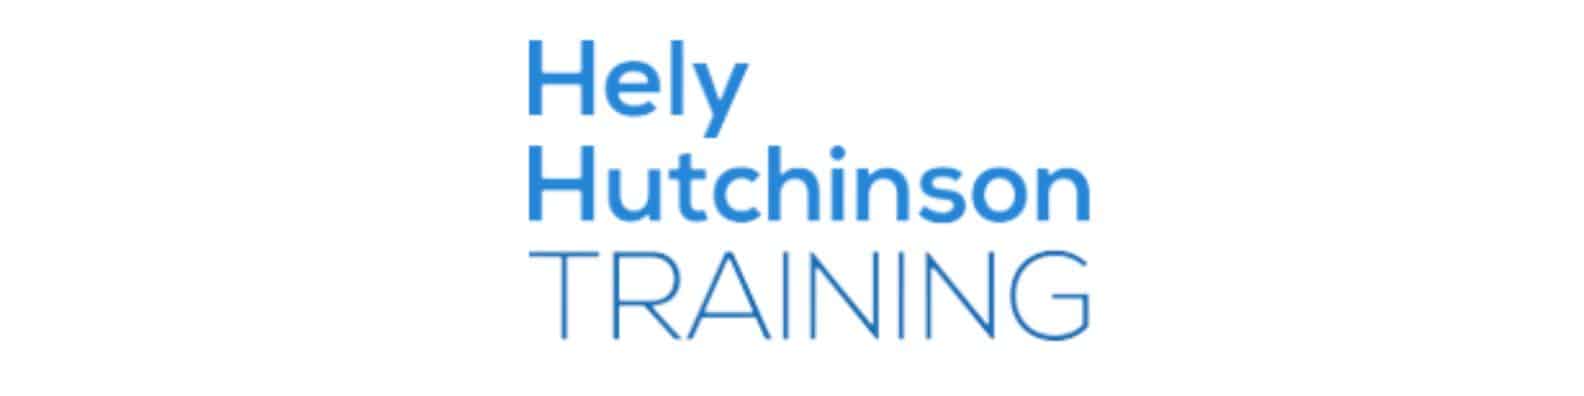 Hely Hutchinson Training Logo blue on white